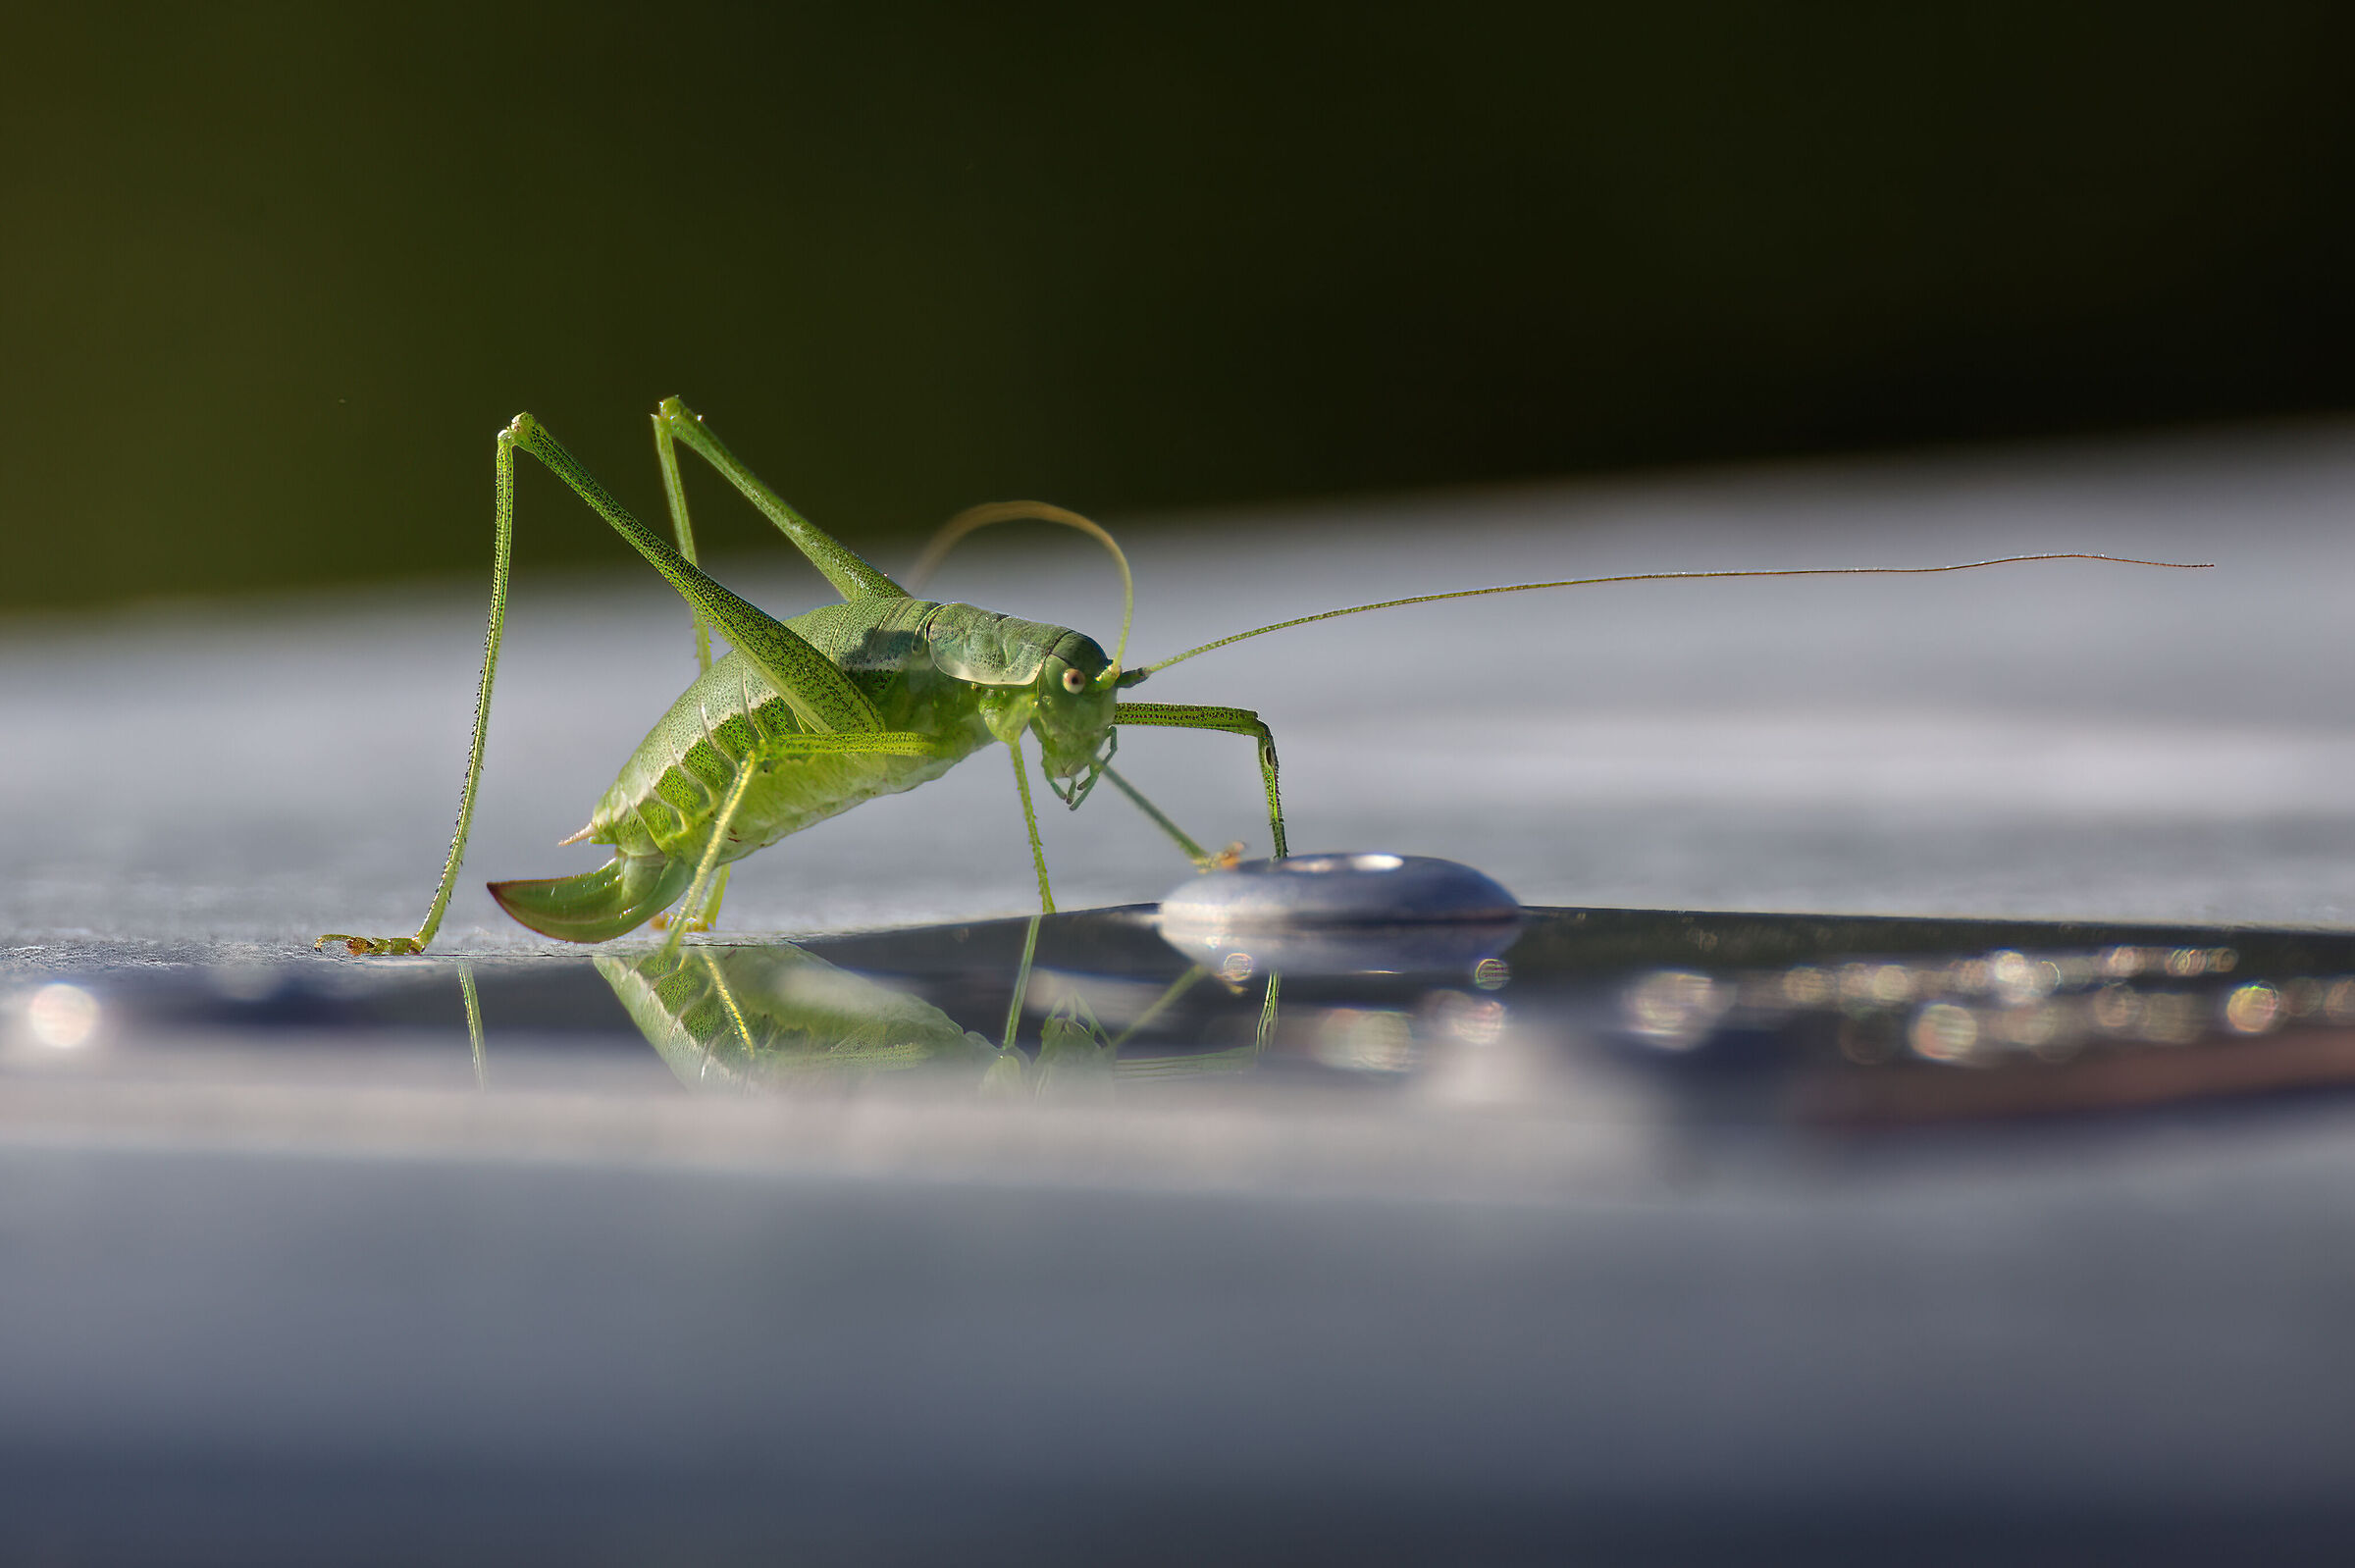 grasshopper controls the tightness of the metal pylons......